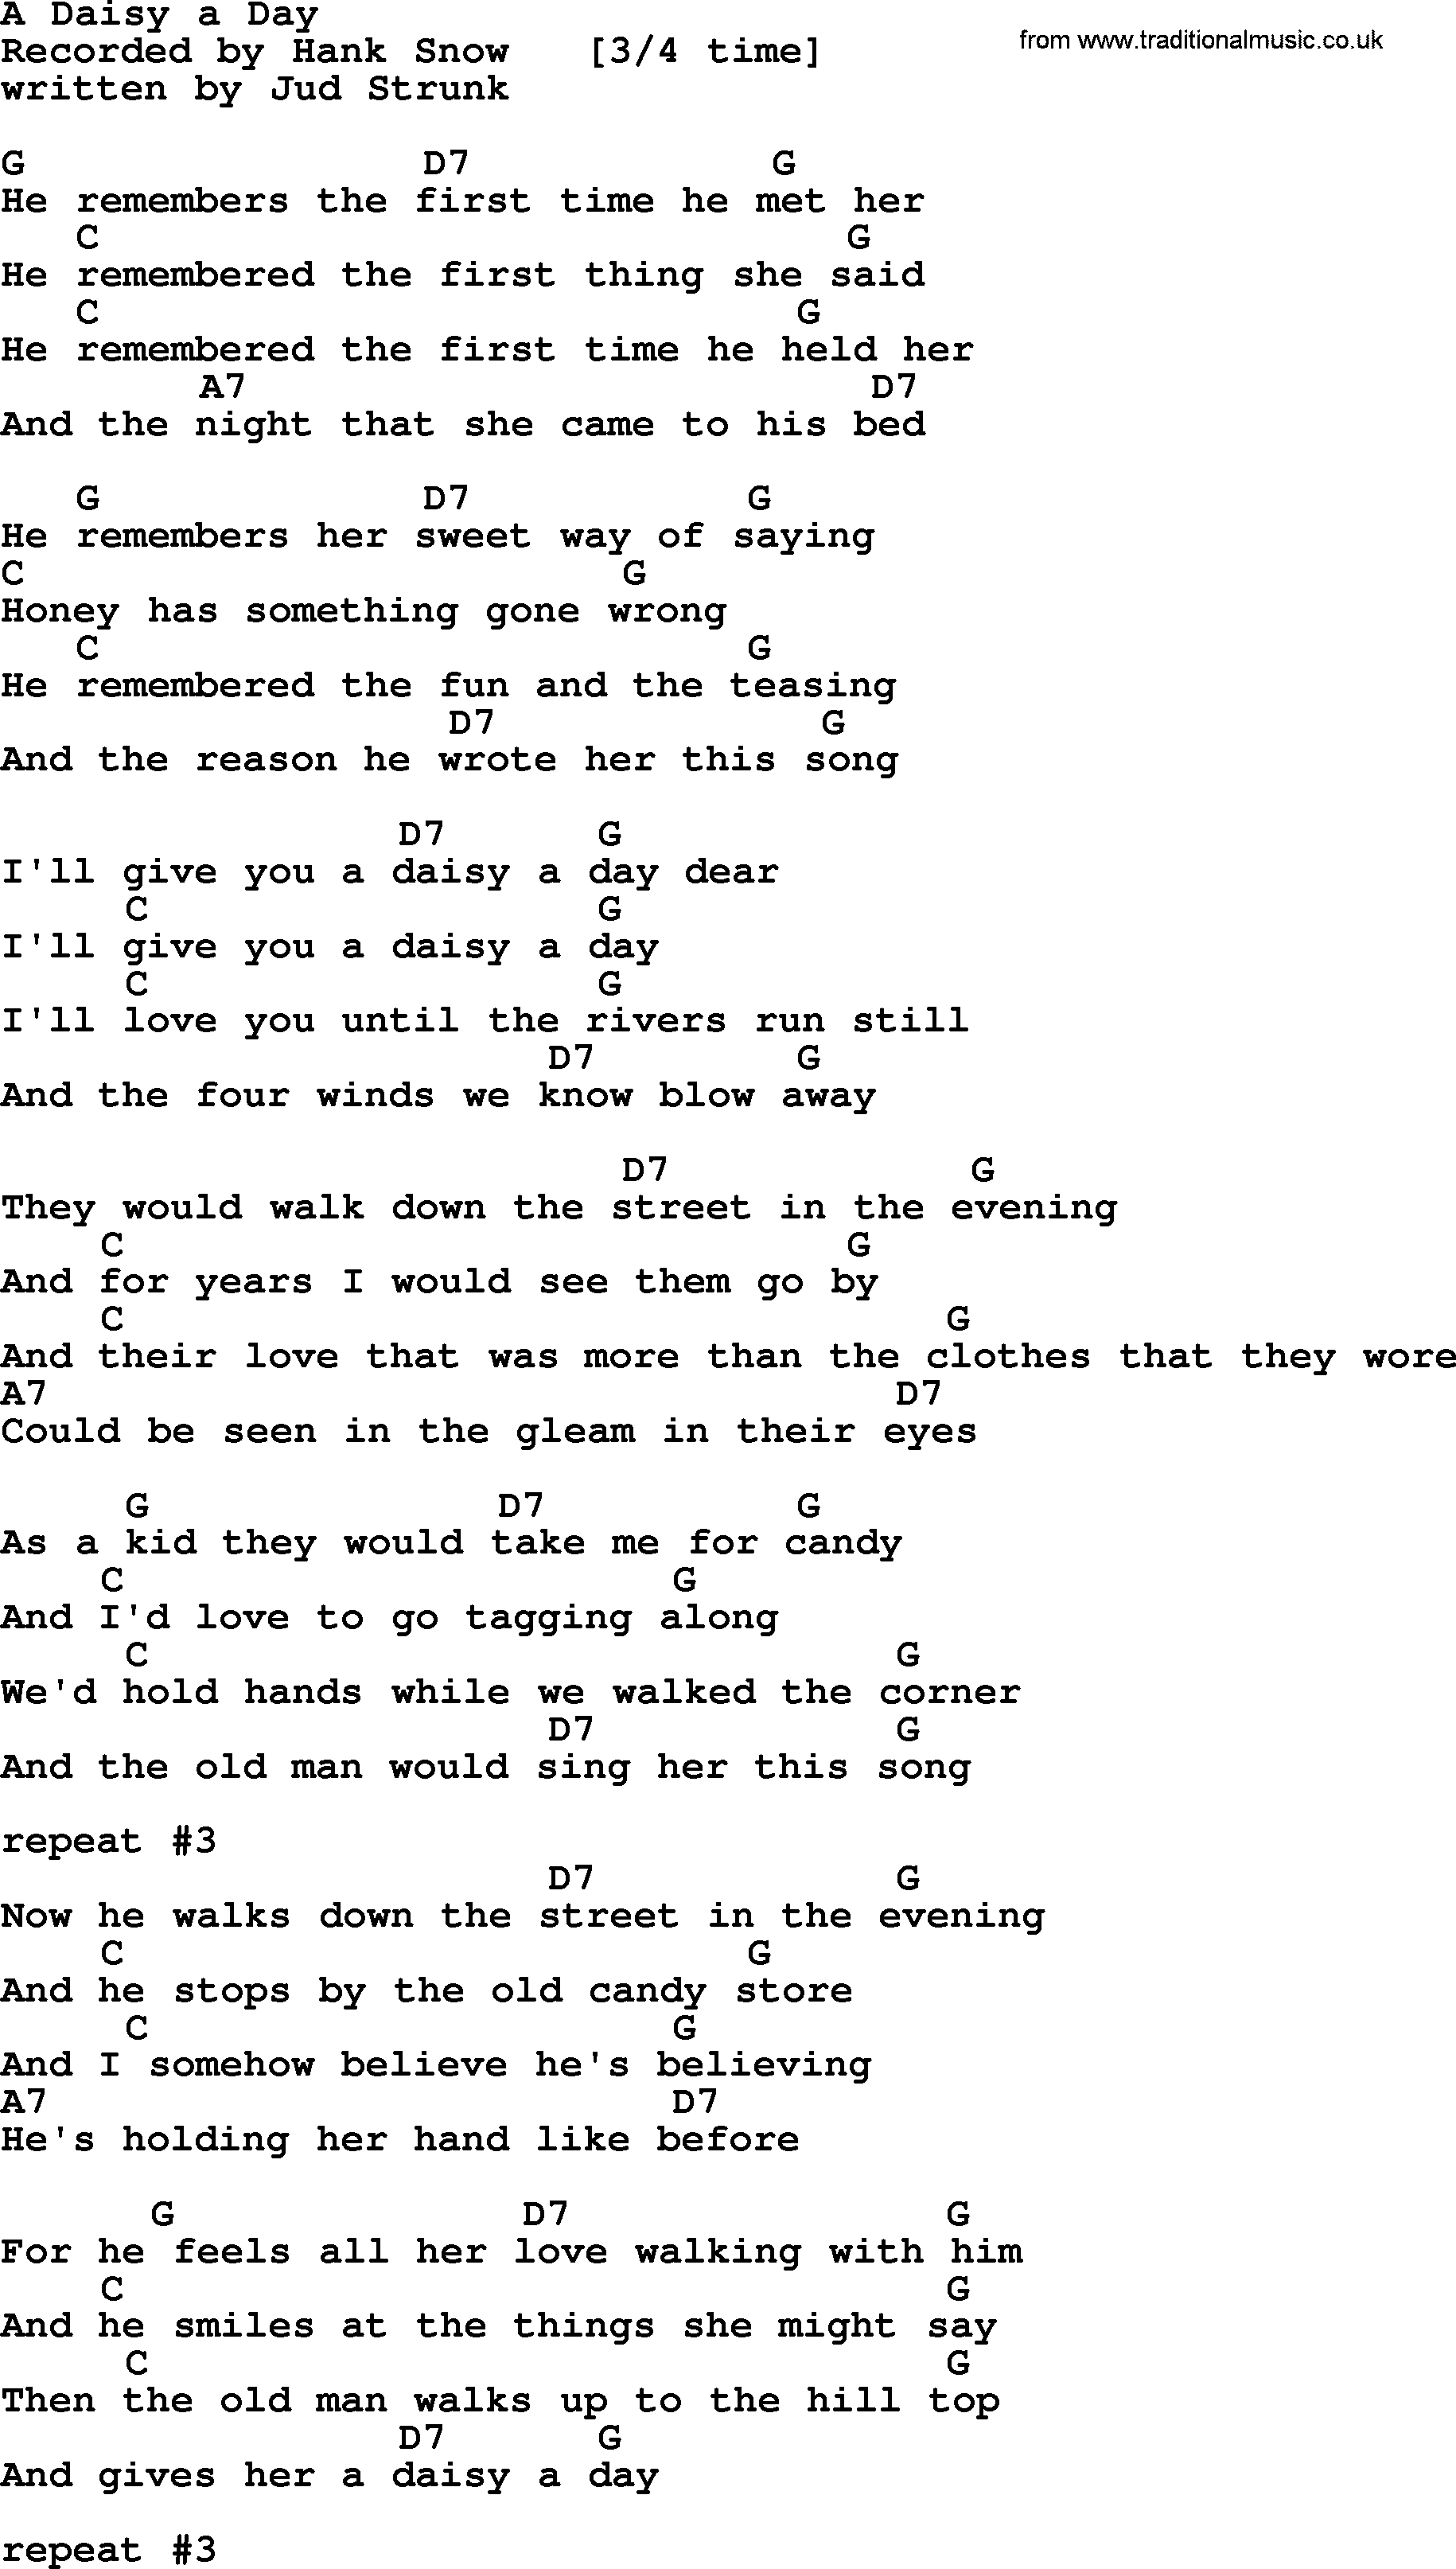 Bluegrass song: A Daisy A Day, lyrics and chords